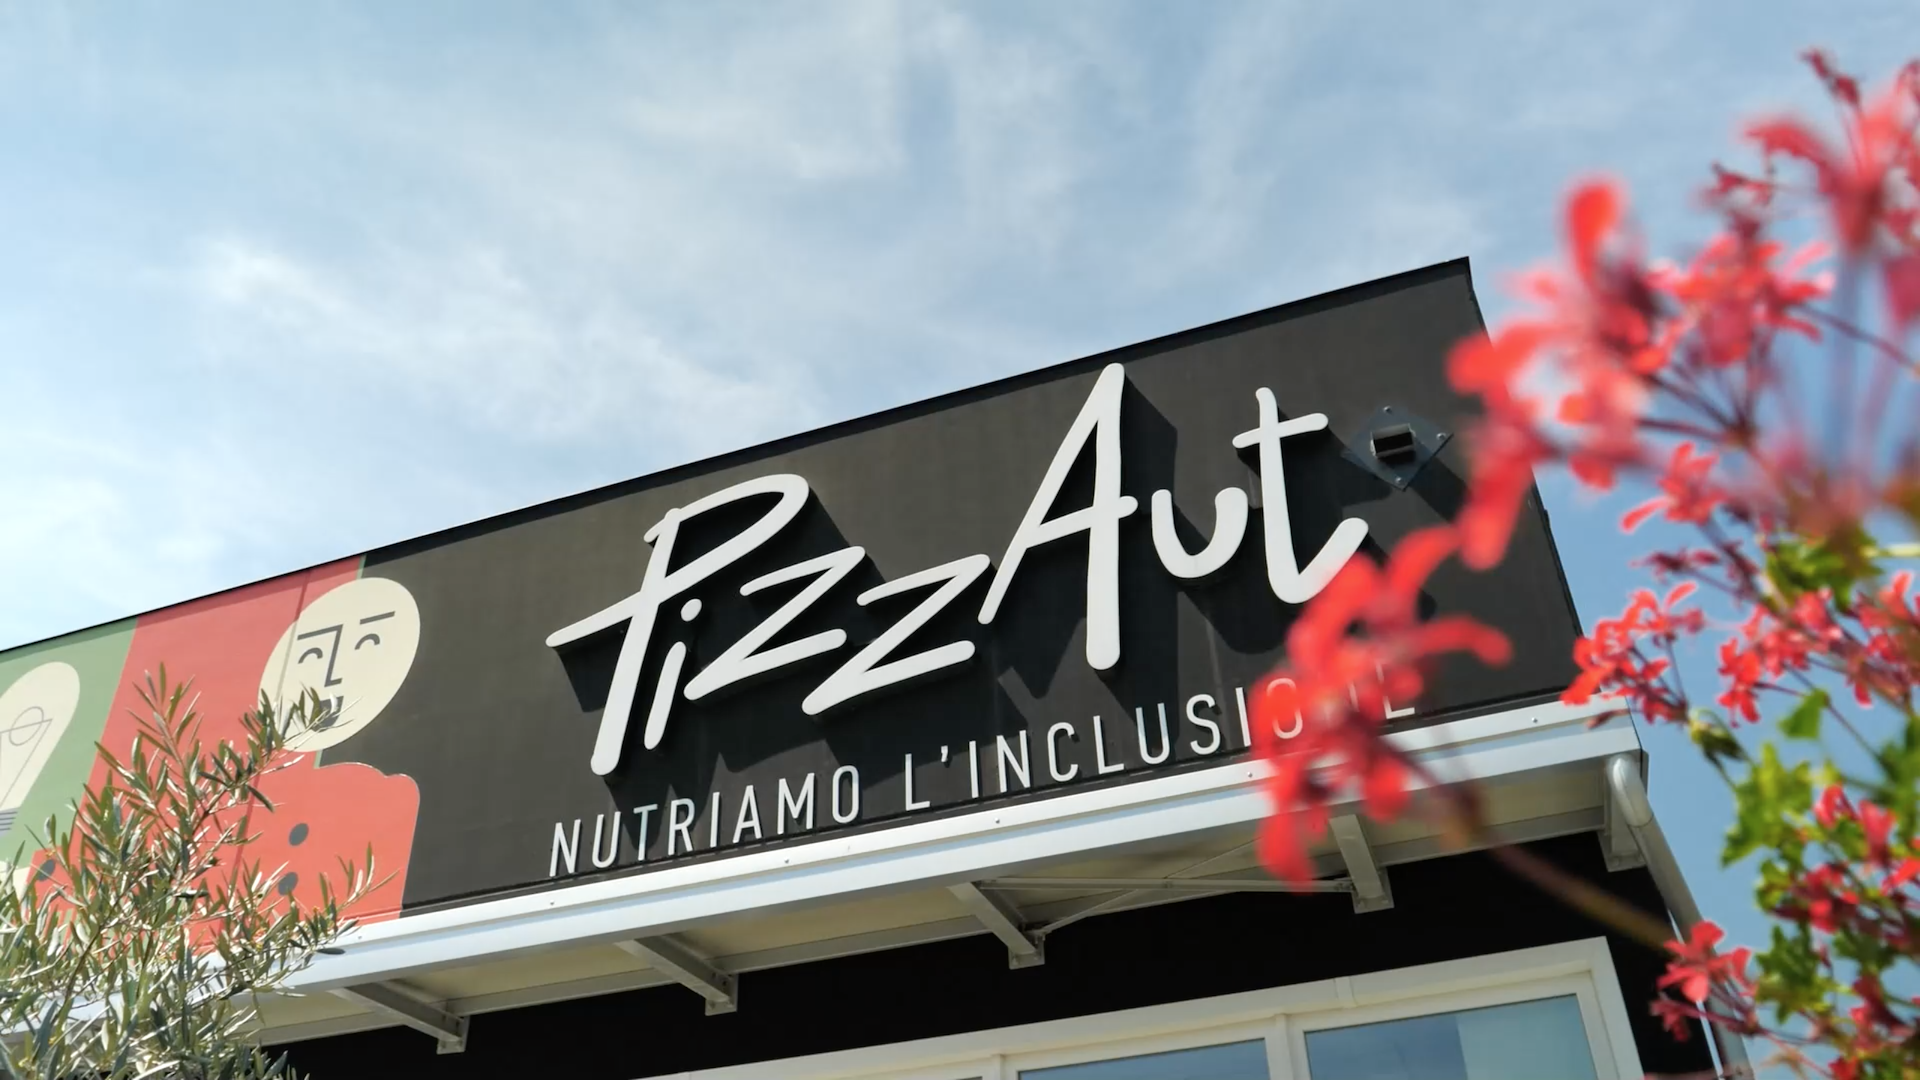 PizzAut - Mattarella - Monza